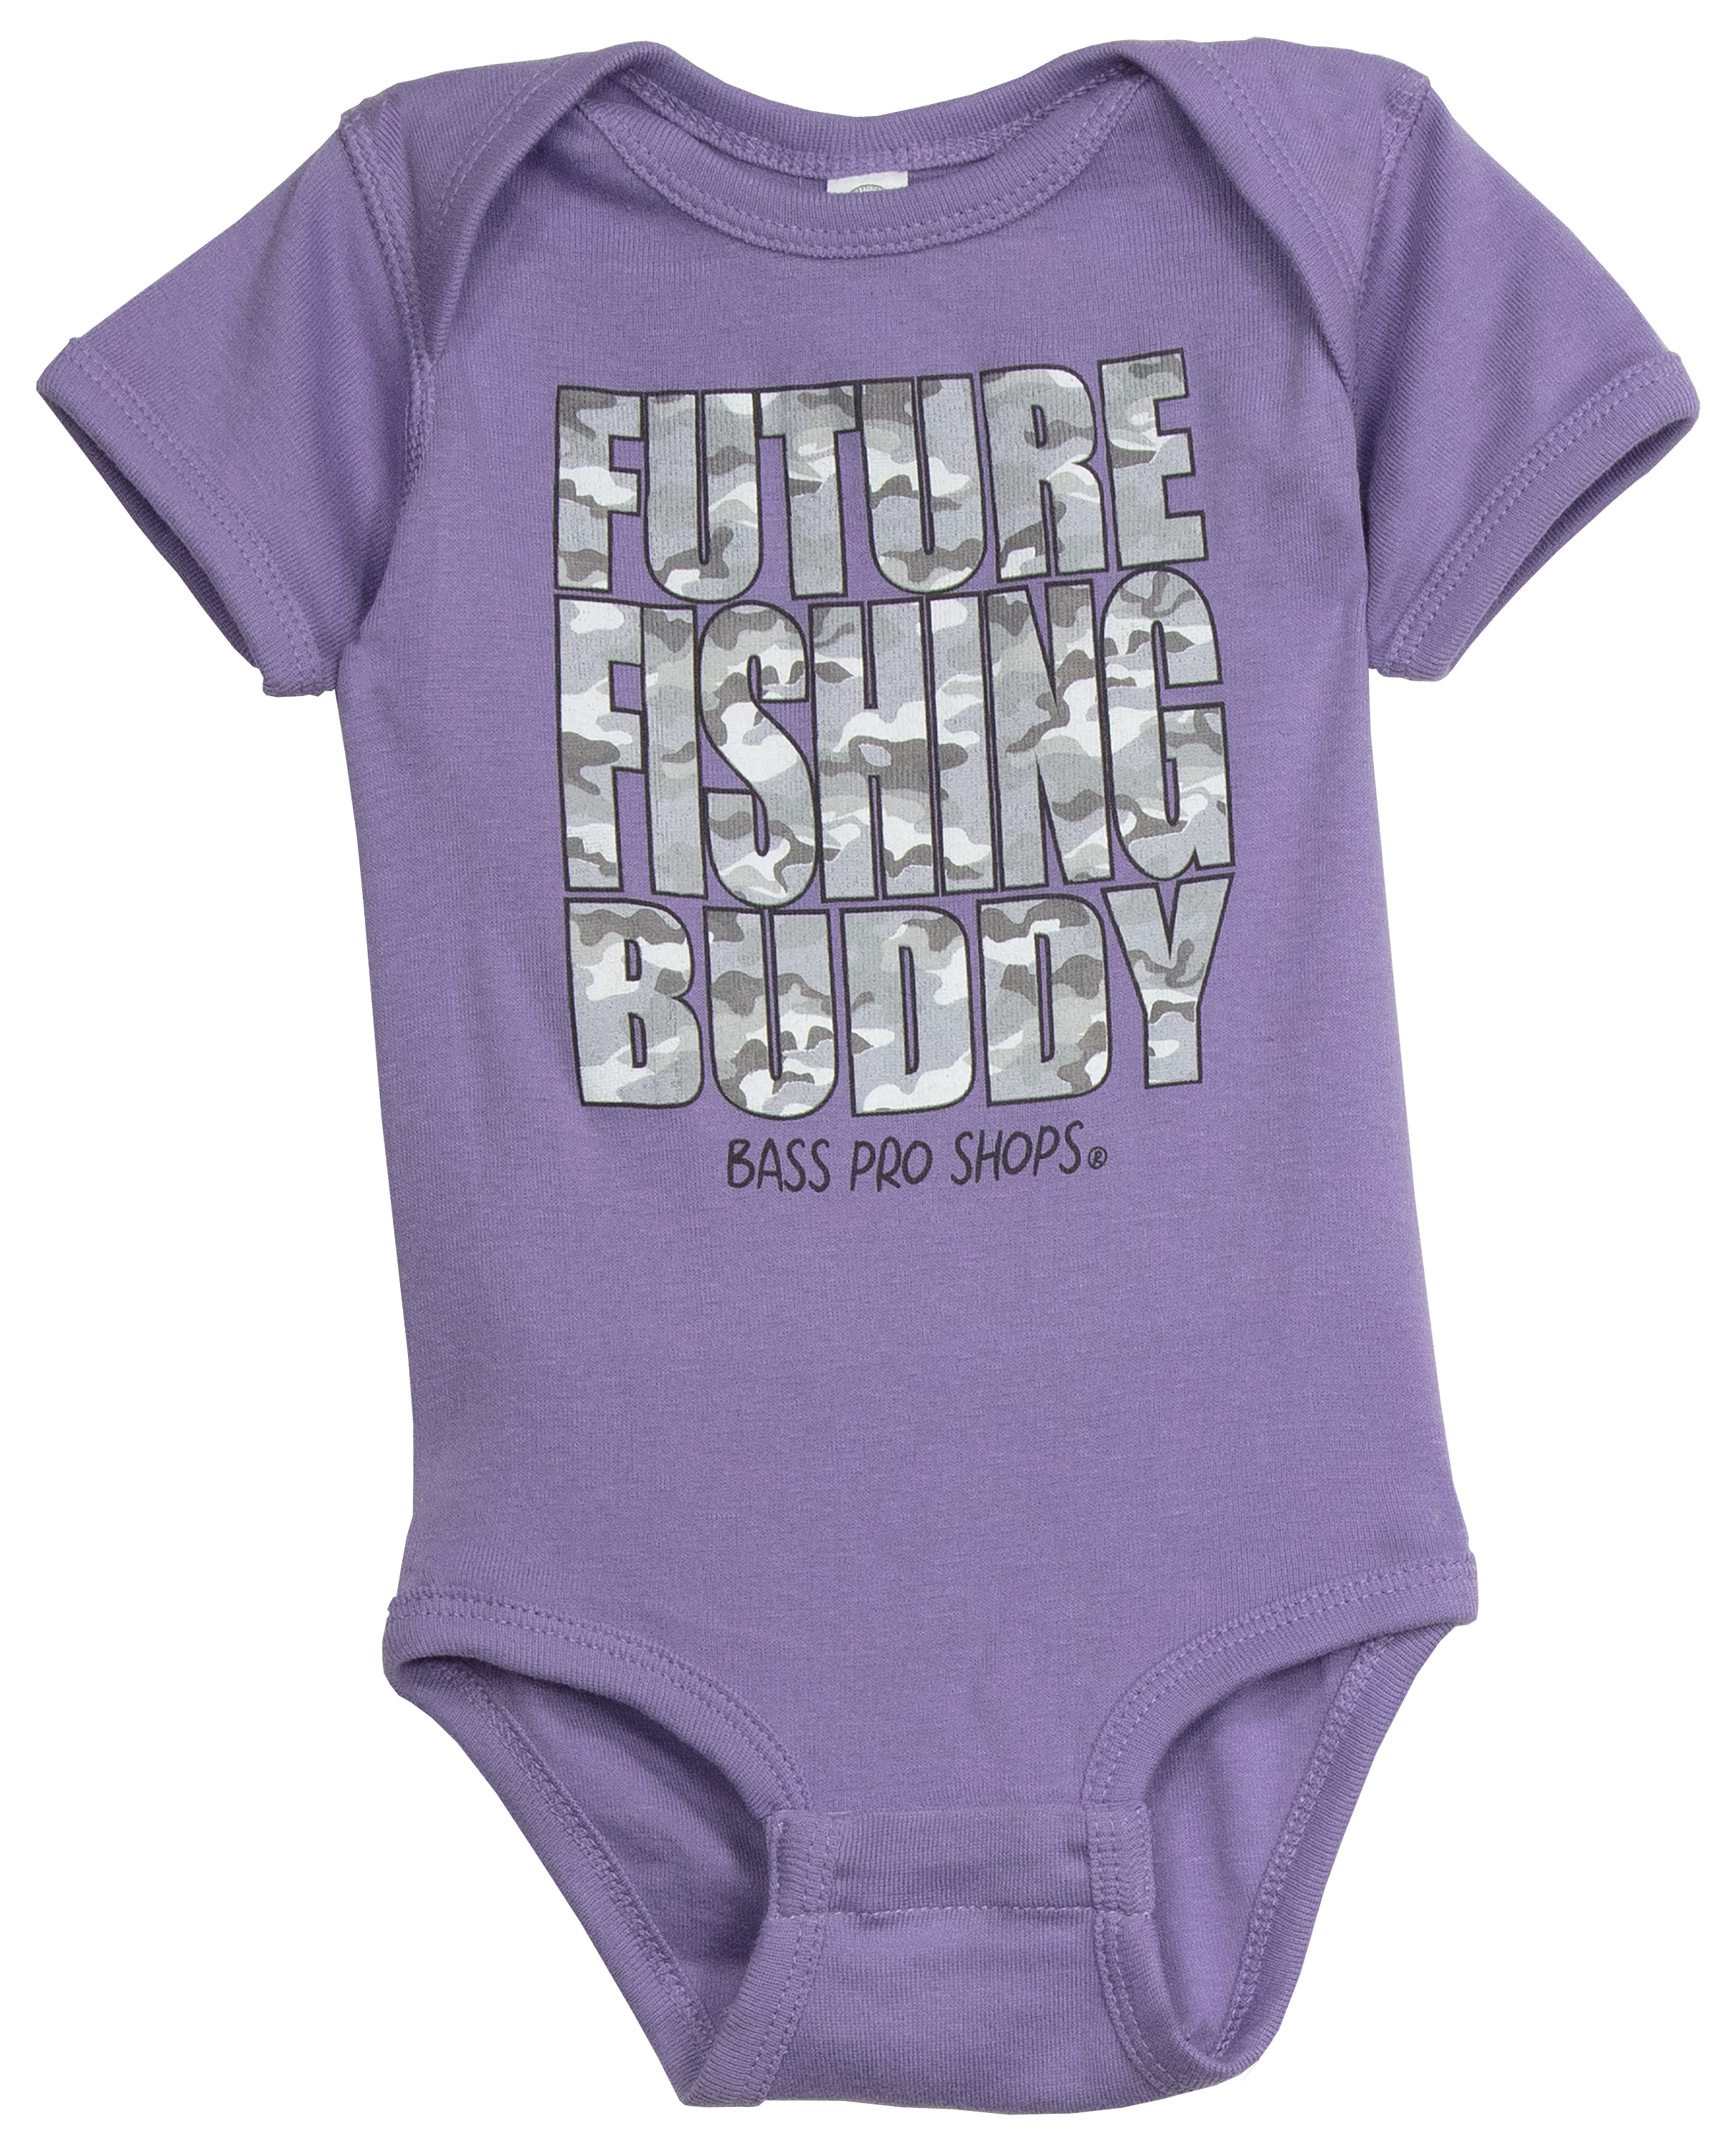 Bass Pro Shops Future Fishing Buddy Short-Sleeve Bodysuit for Babies - Vintage Indigo - 6 Months